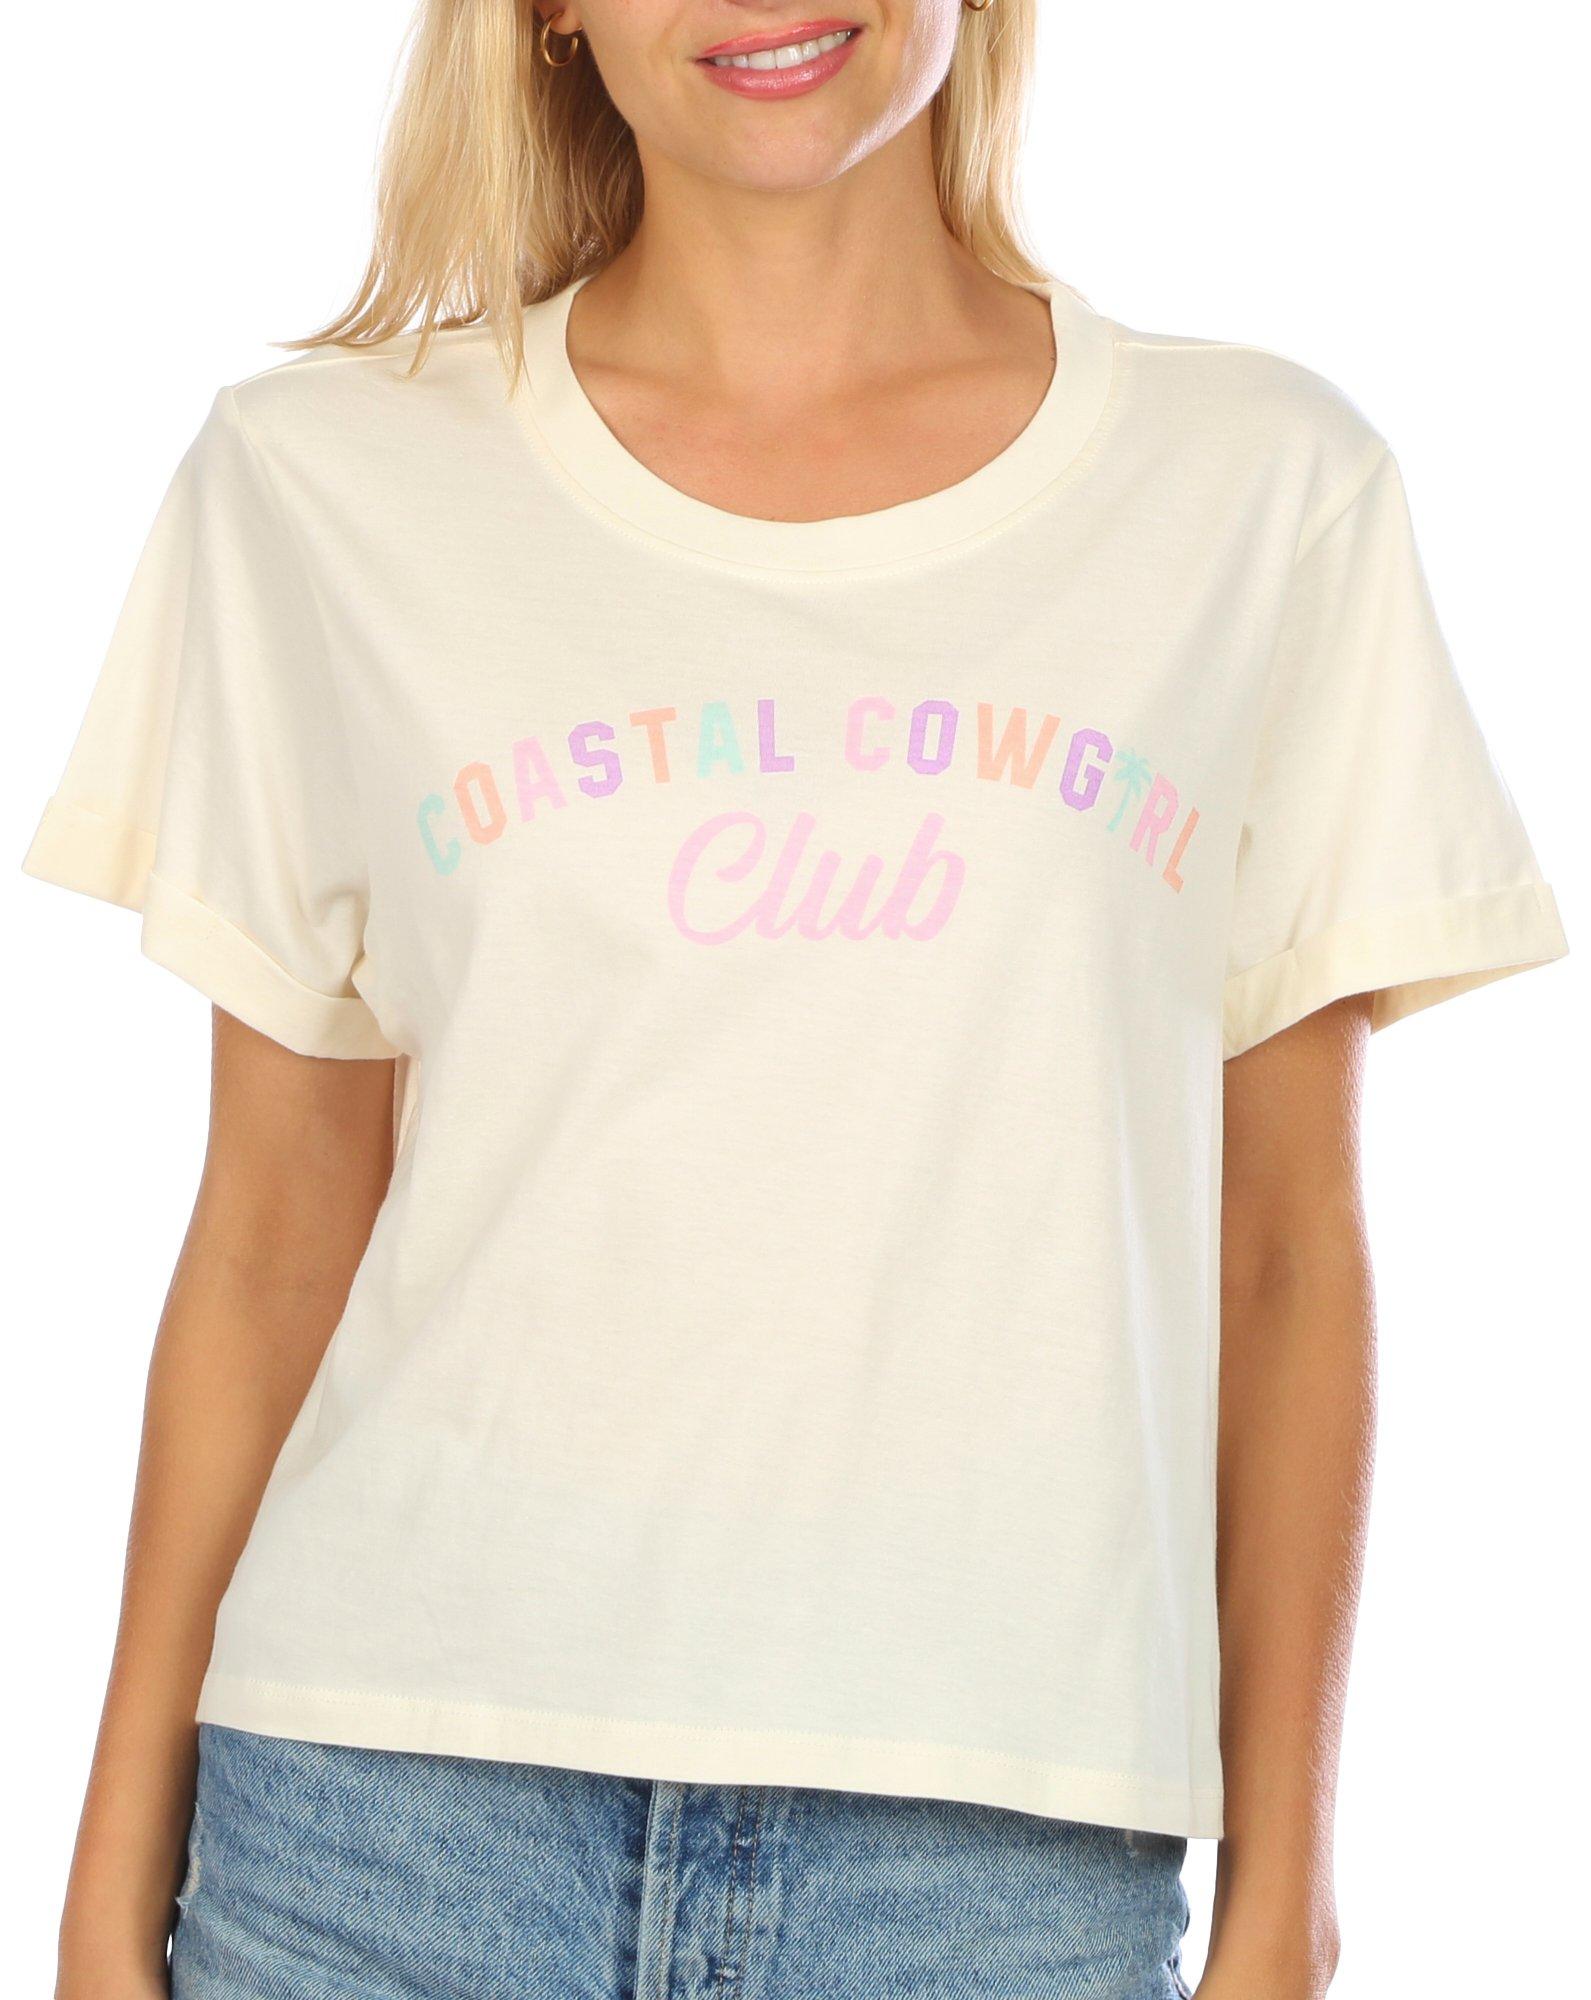 Juniors Coastal Cowgirl T-shirt